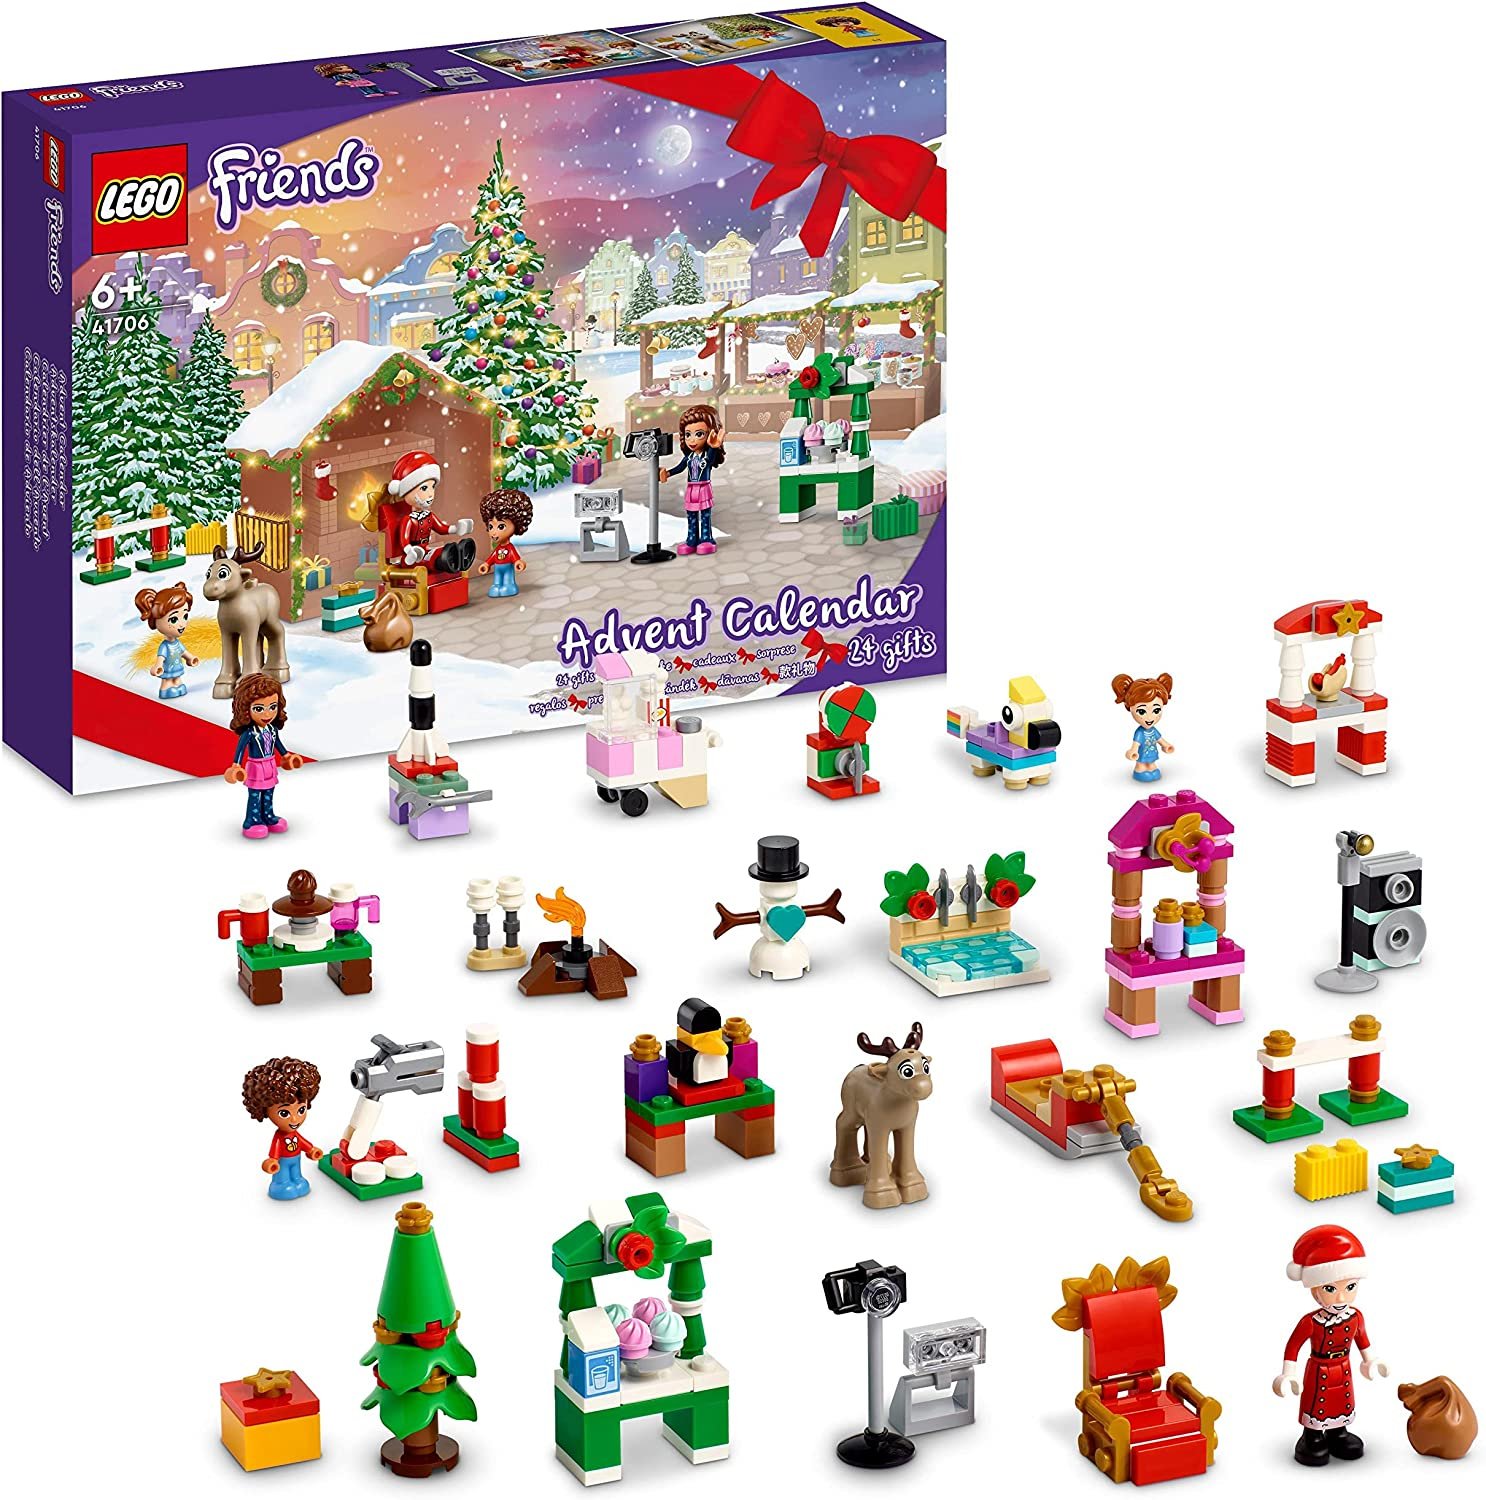 LEGO 41706 Friends Advent Calendar 2022 Construction Toy